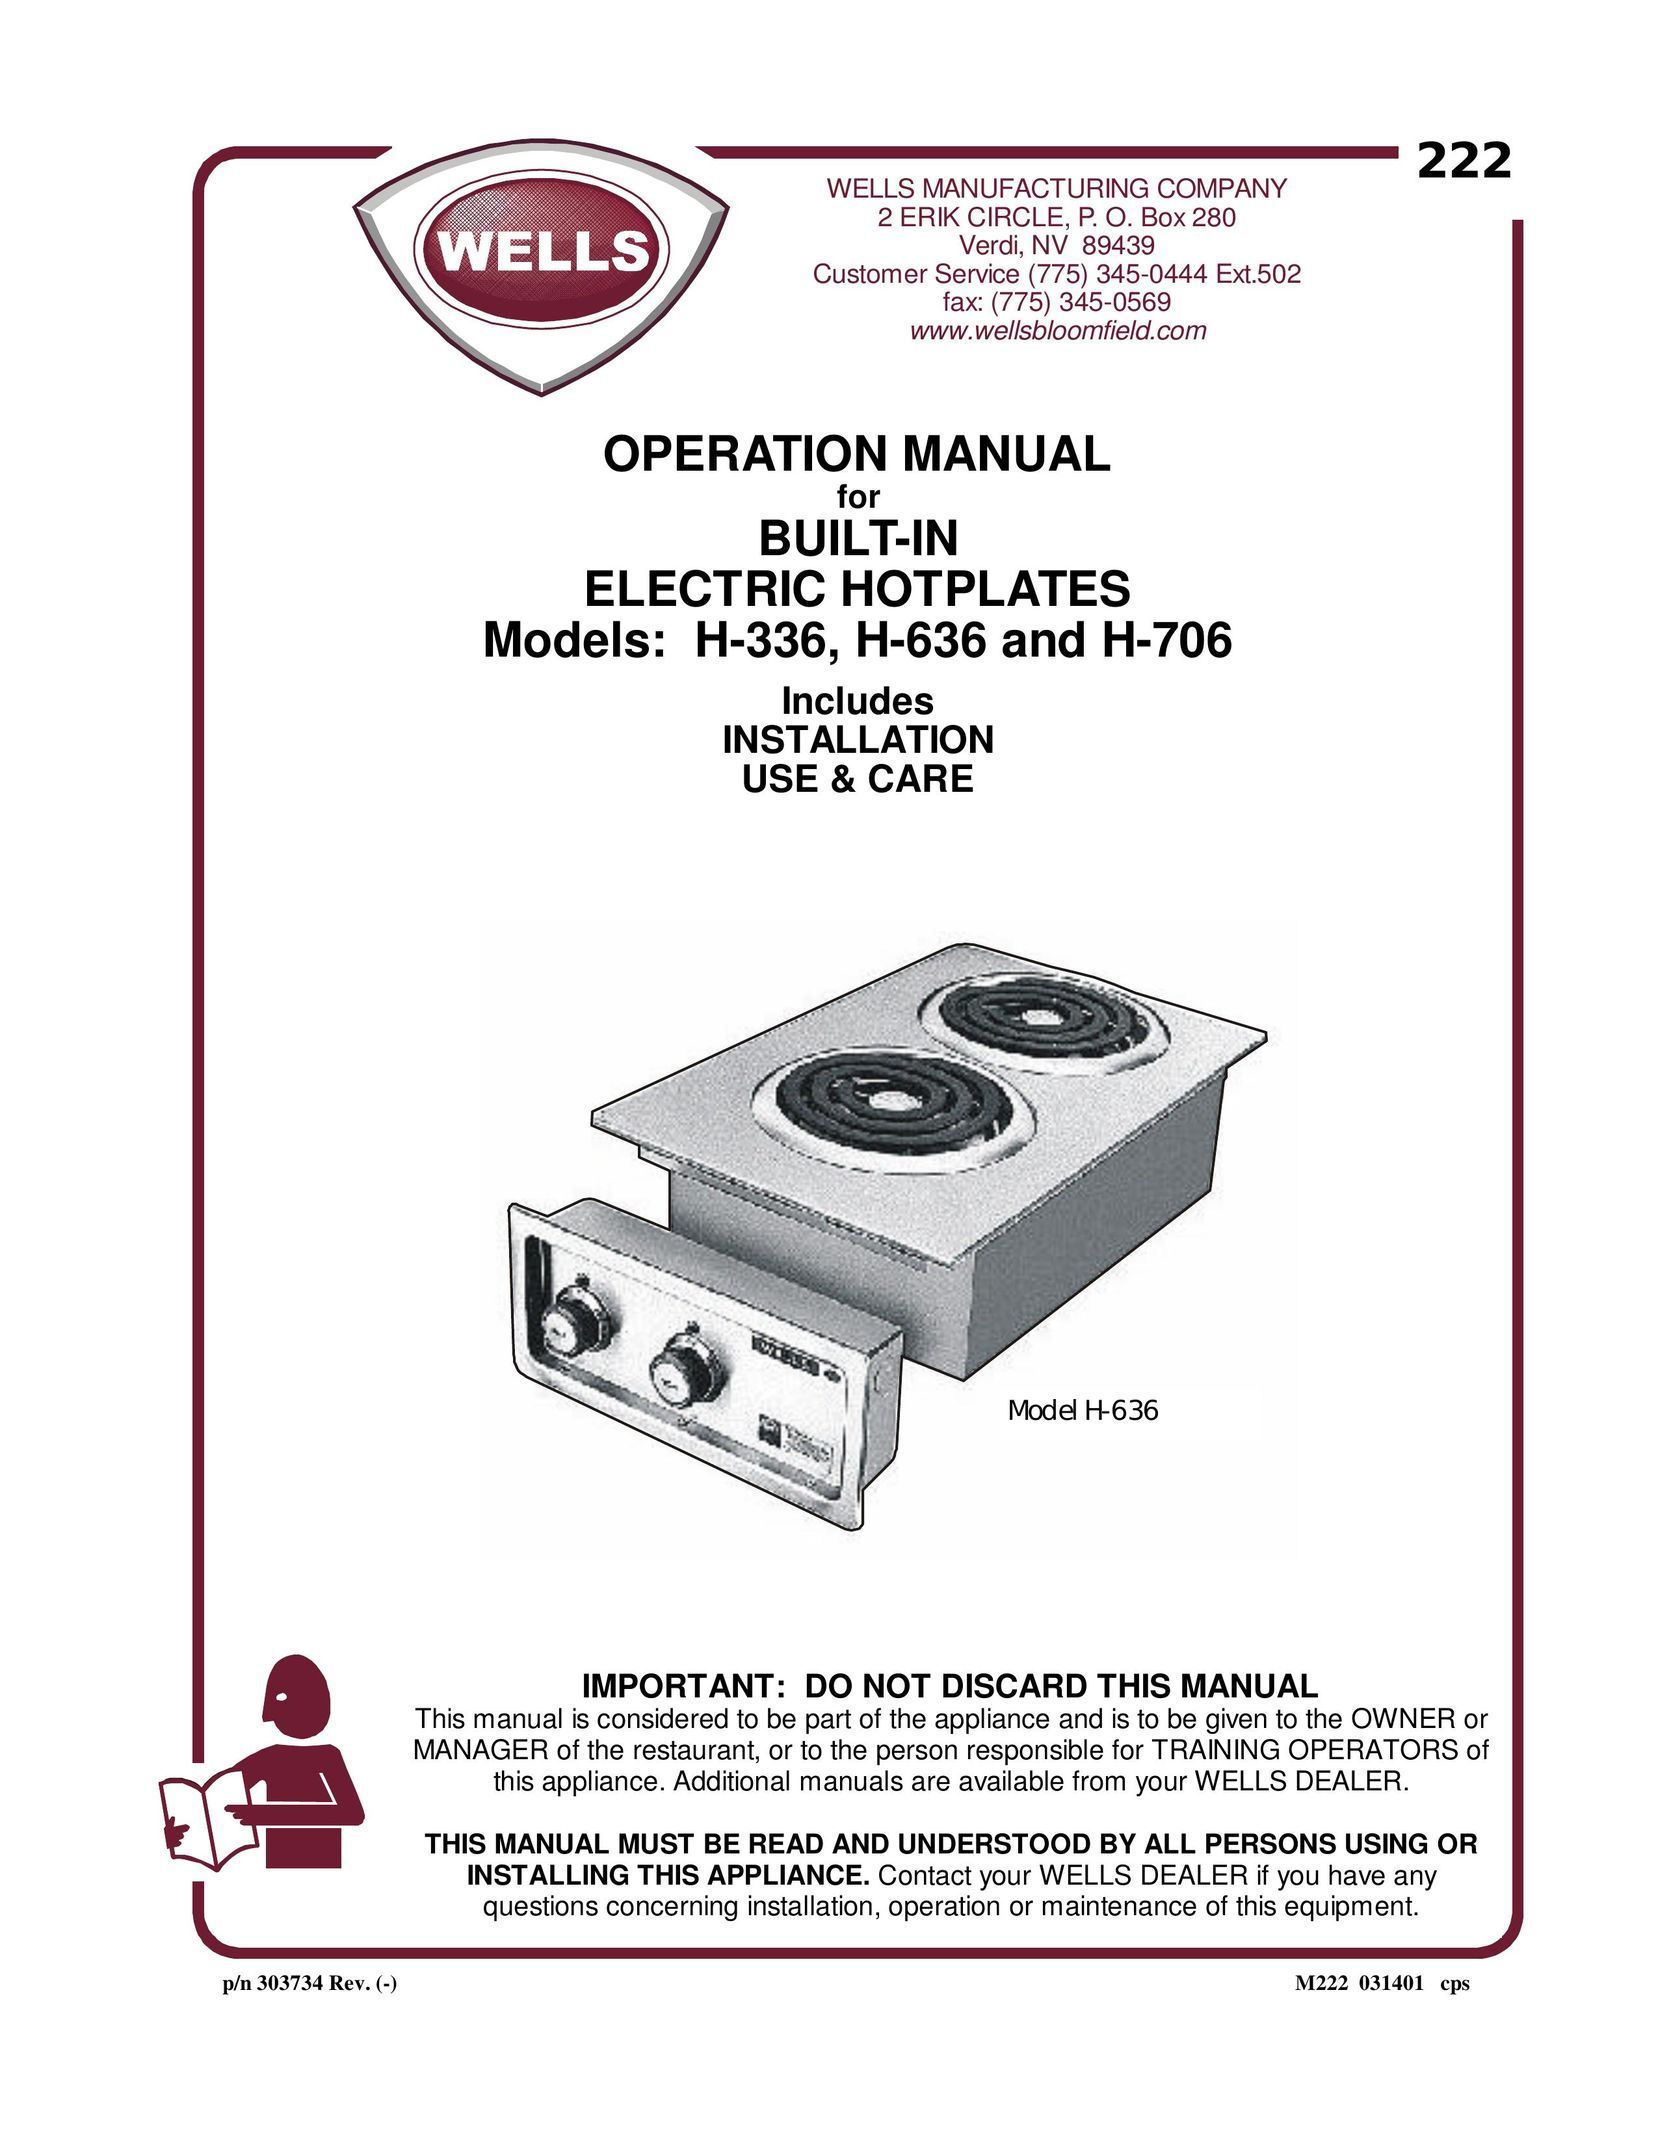 Wells H-336 Food Warmer User Manual